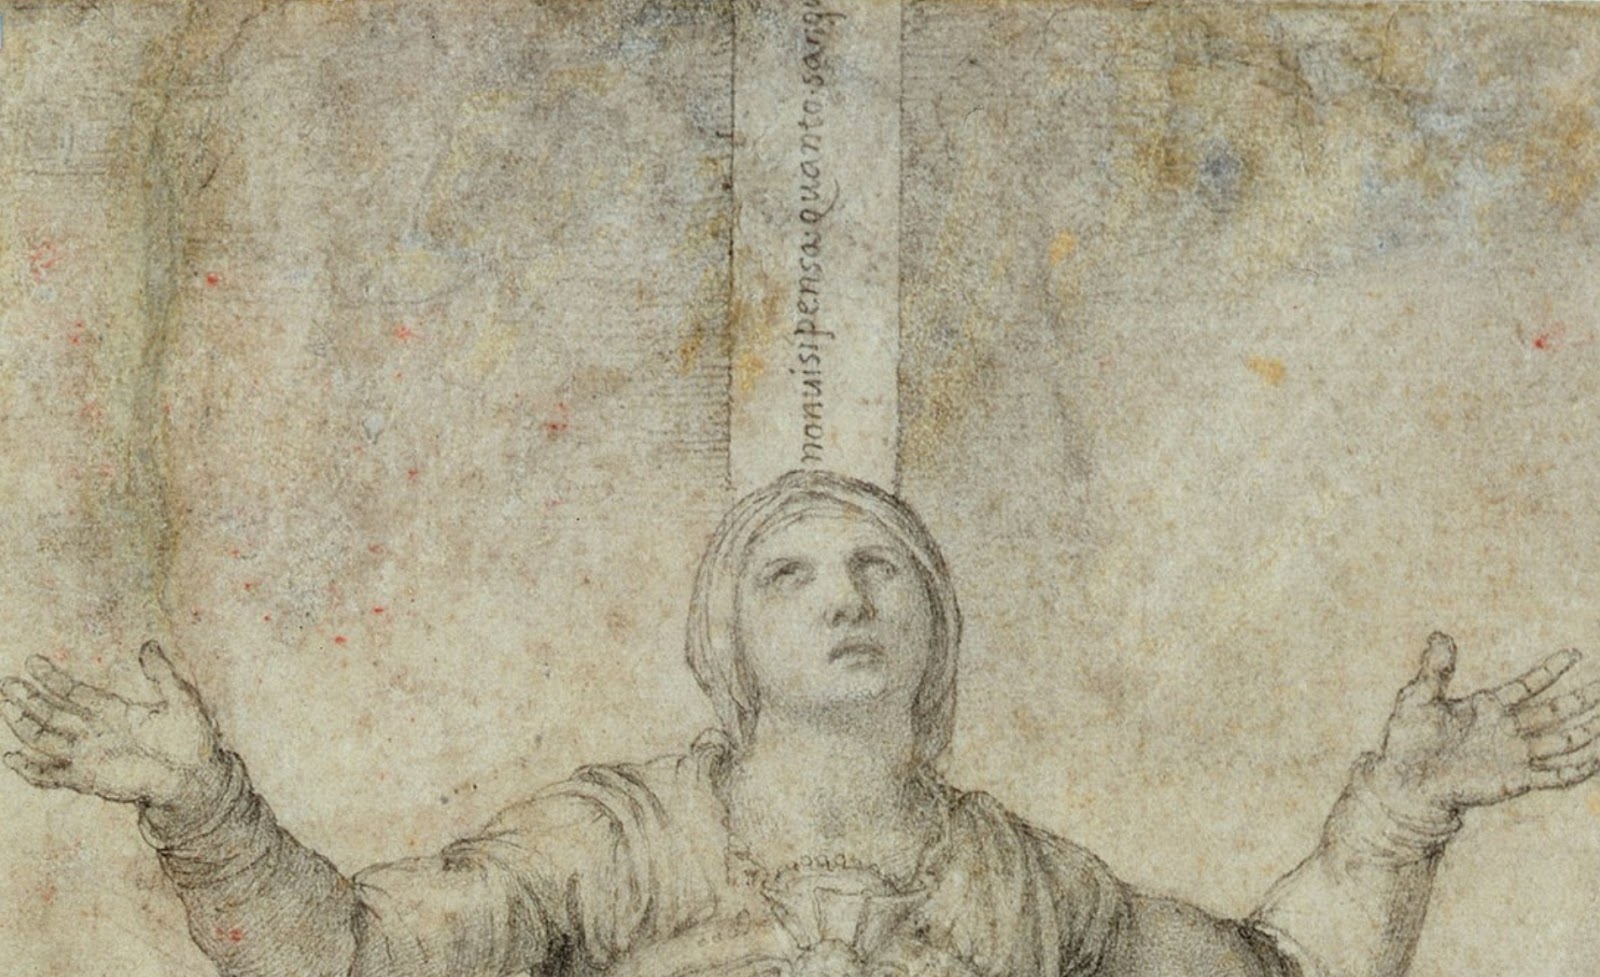 Michelangelo+Buonarroti-1475-1564 (442).jpg